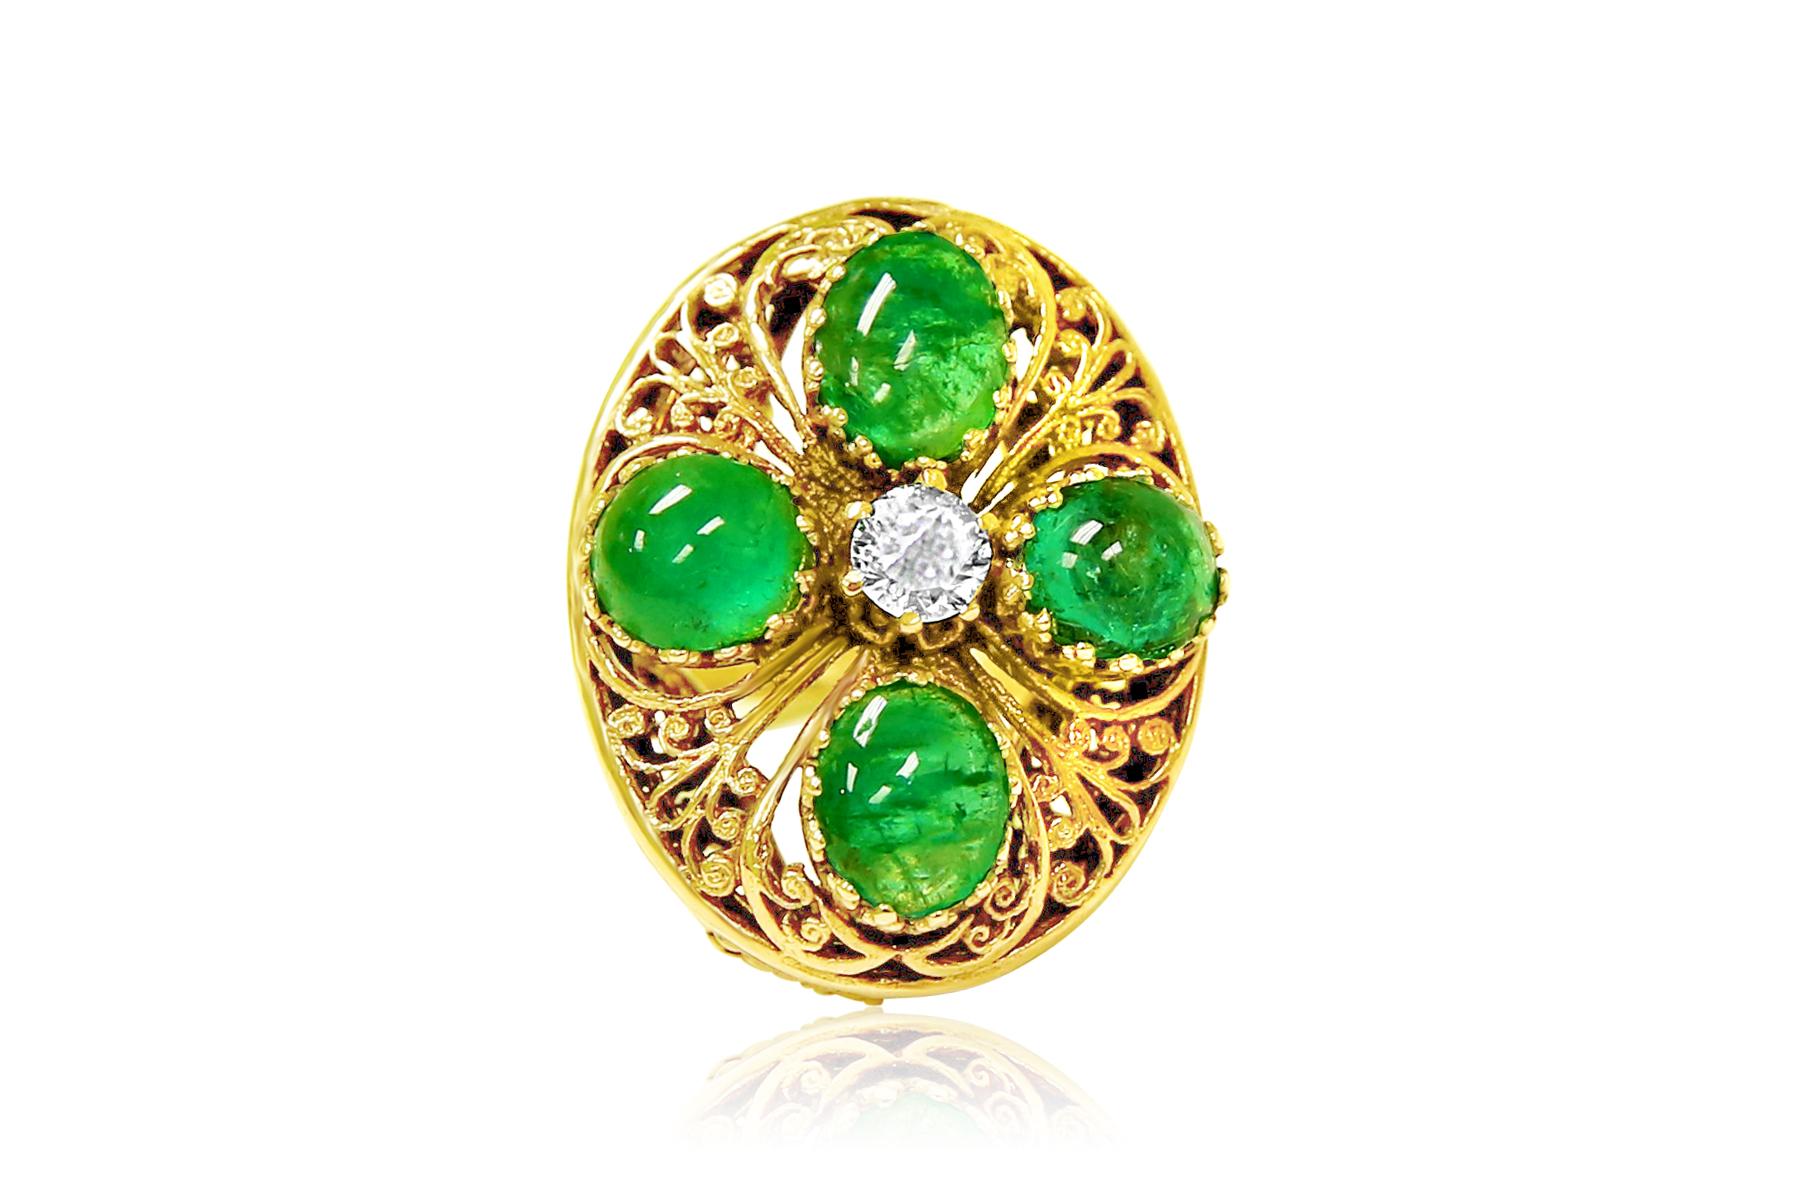 Cabochon Vintage 8.50 Carat Emerald Diamond Ring in 14 Karat Gold For Sale